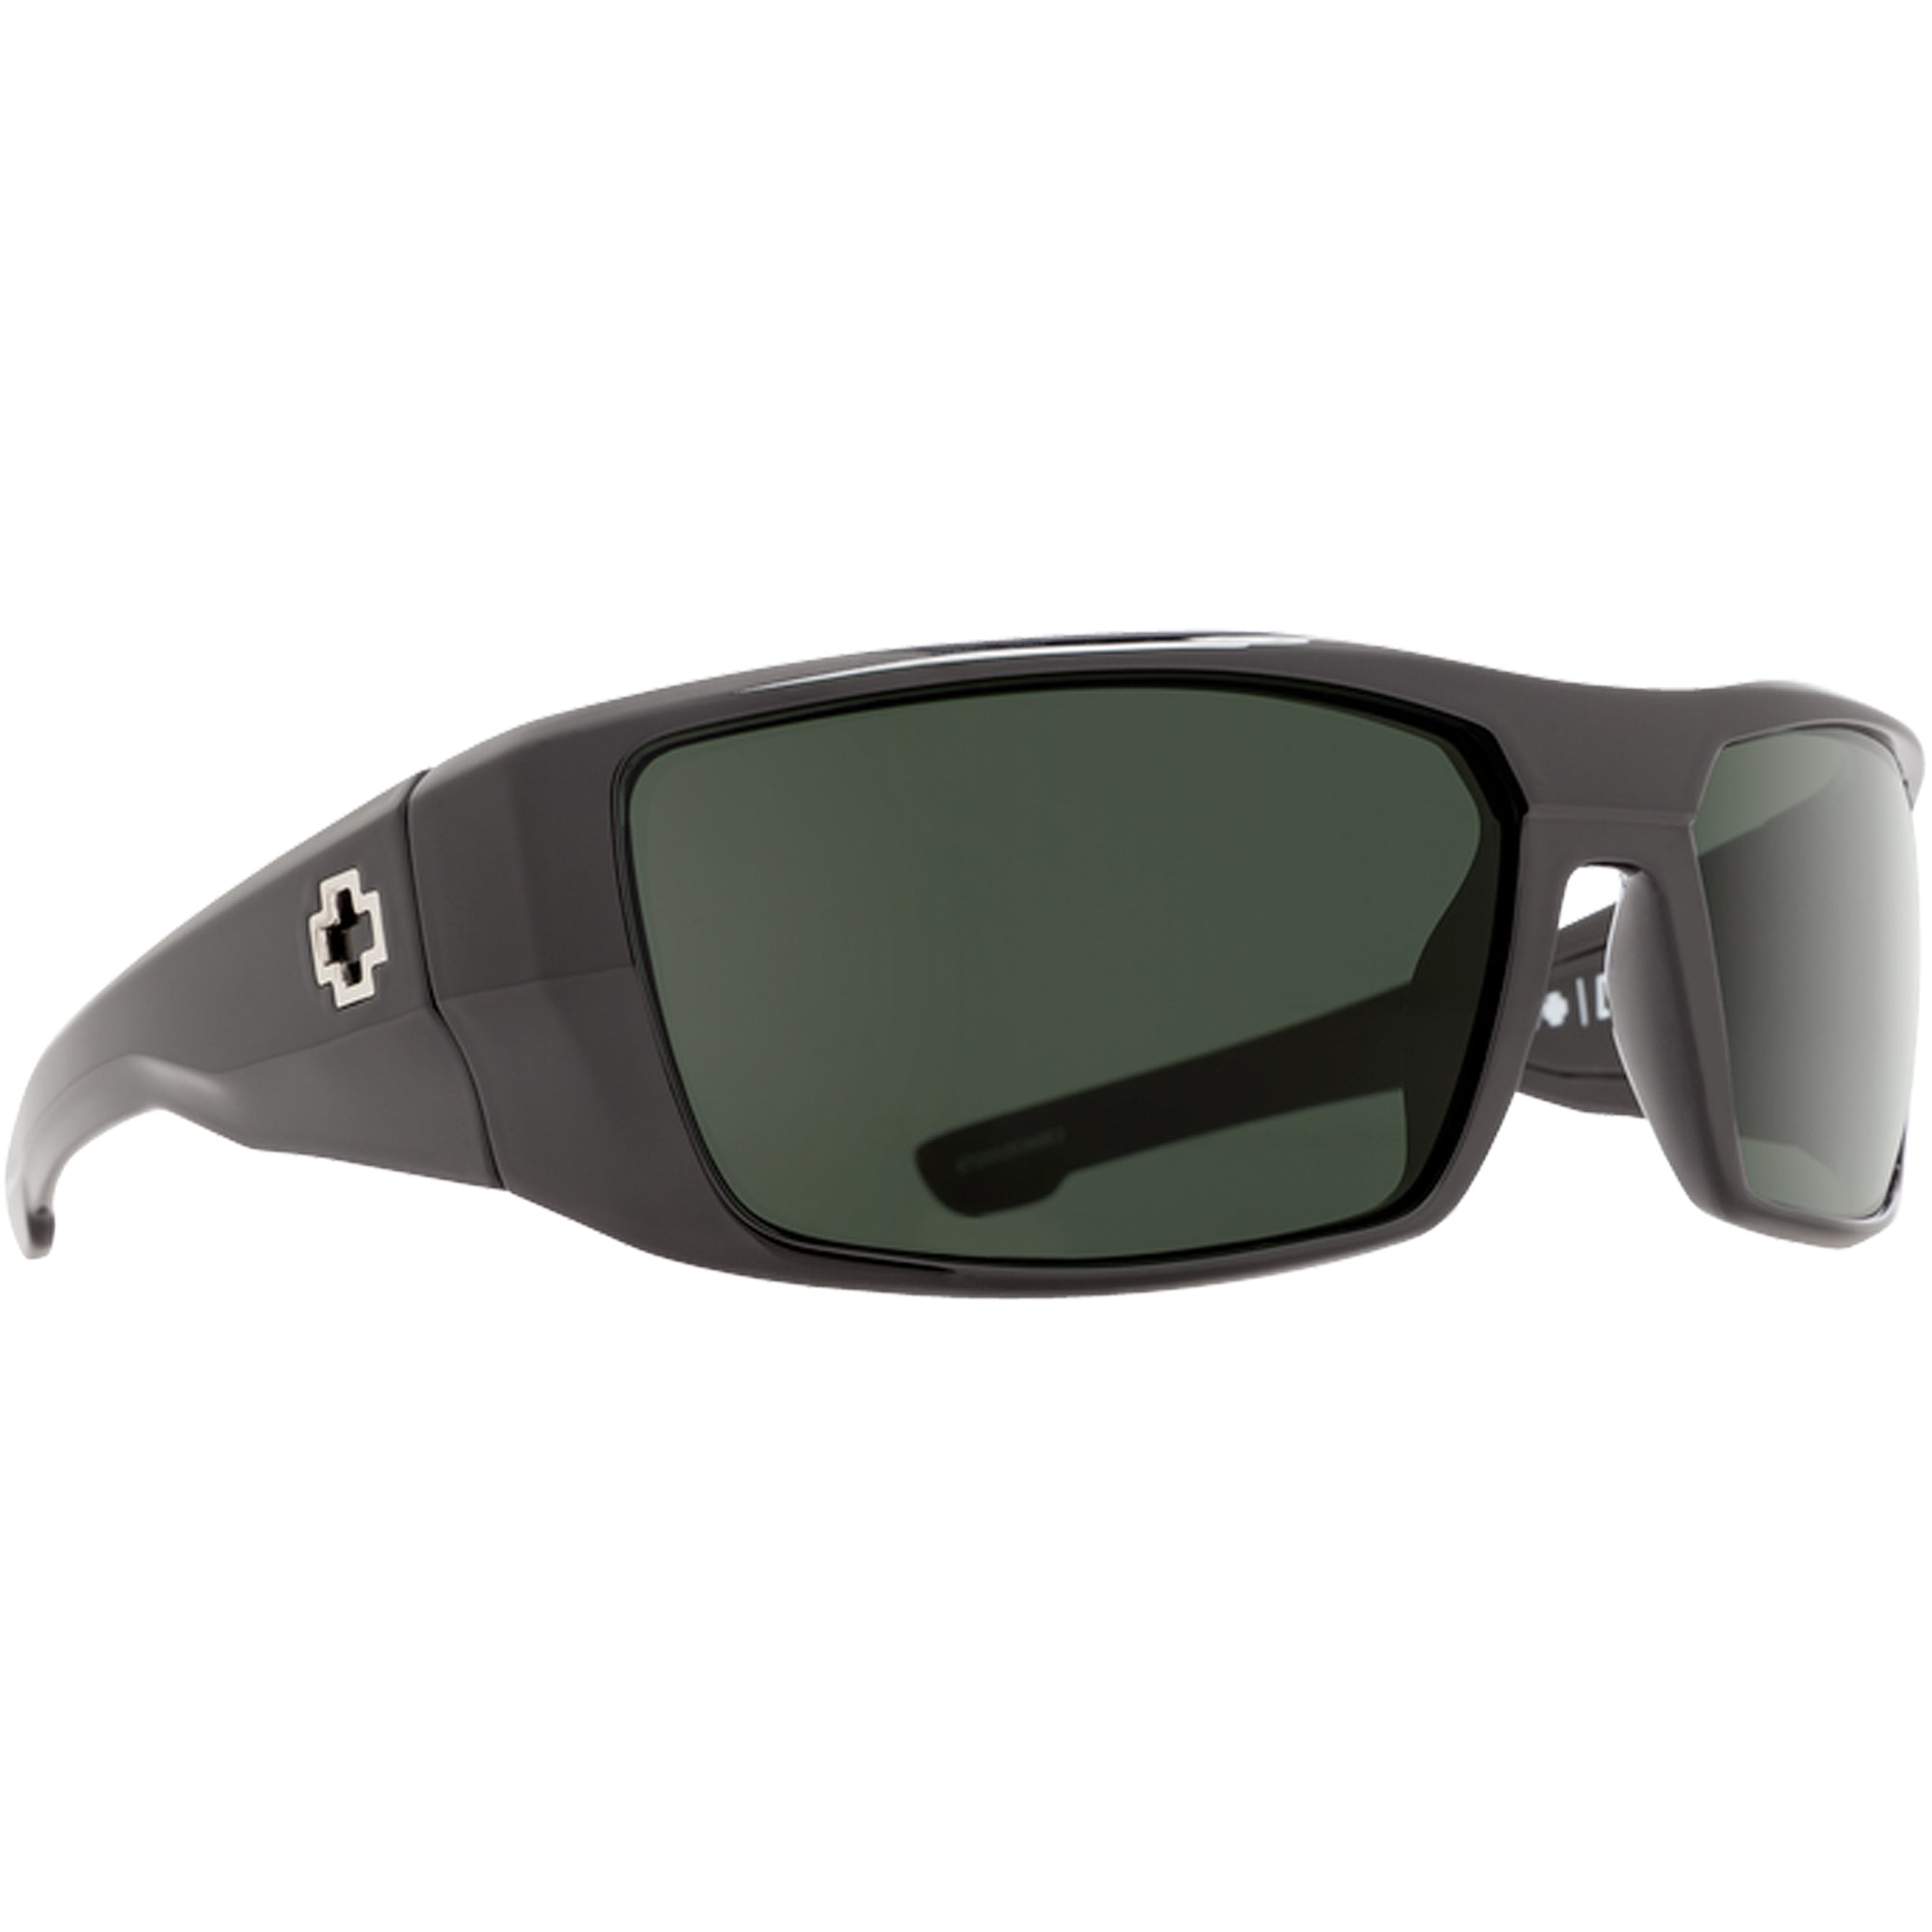 Spy Dirk Men's Polarized Sunglasses